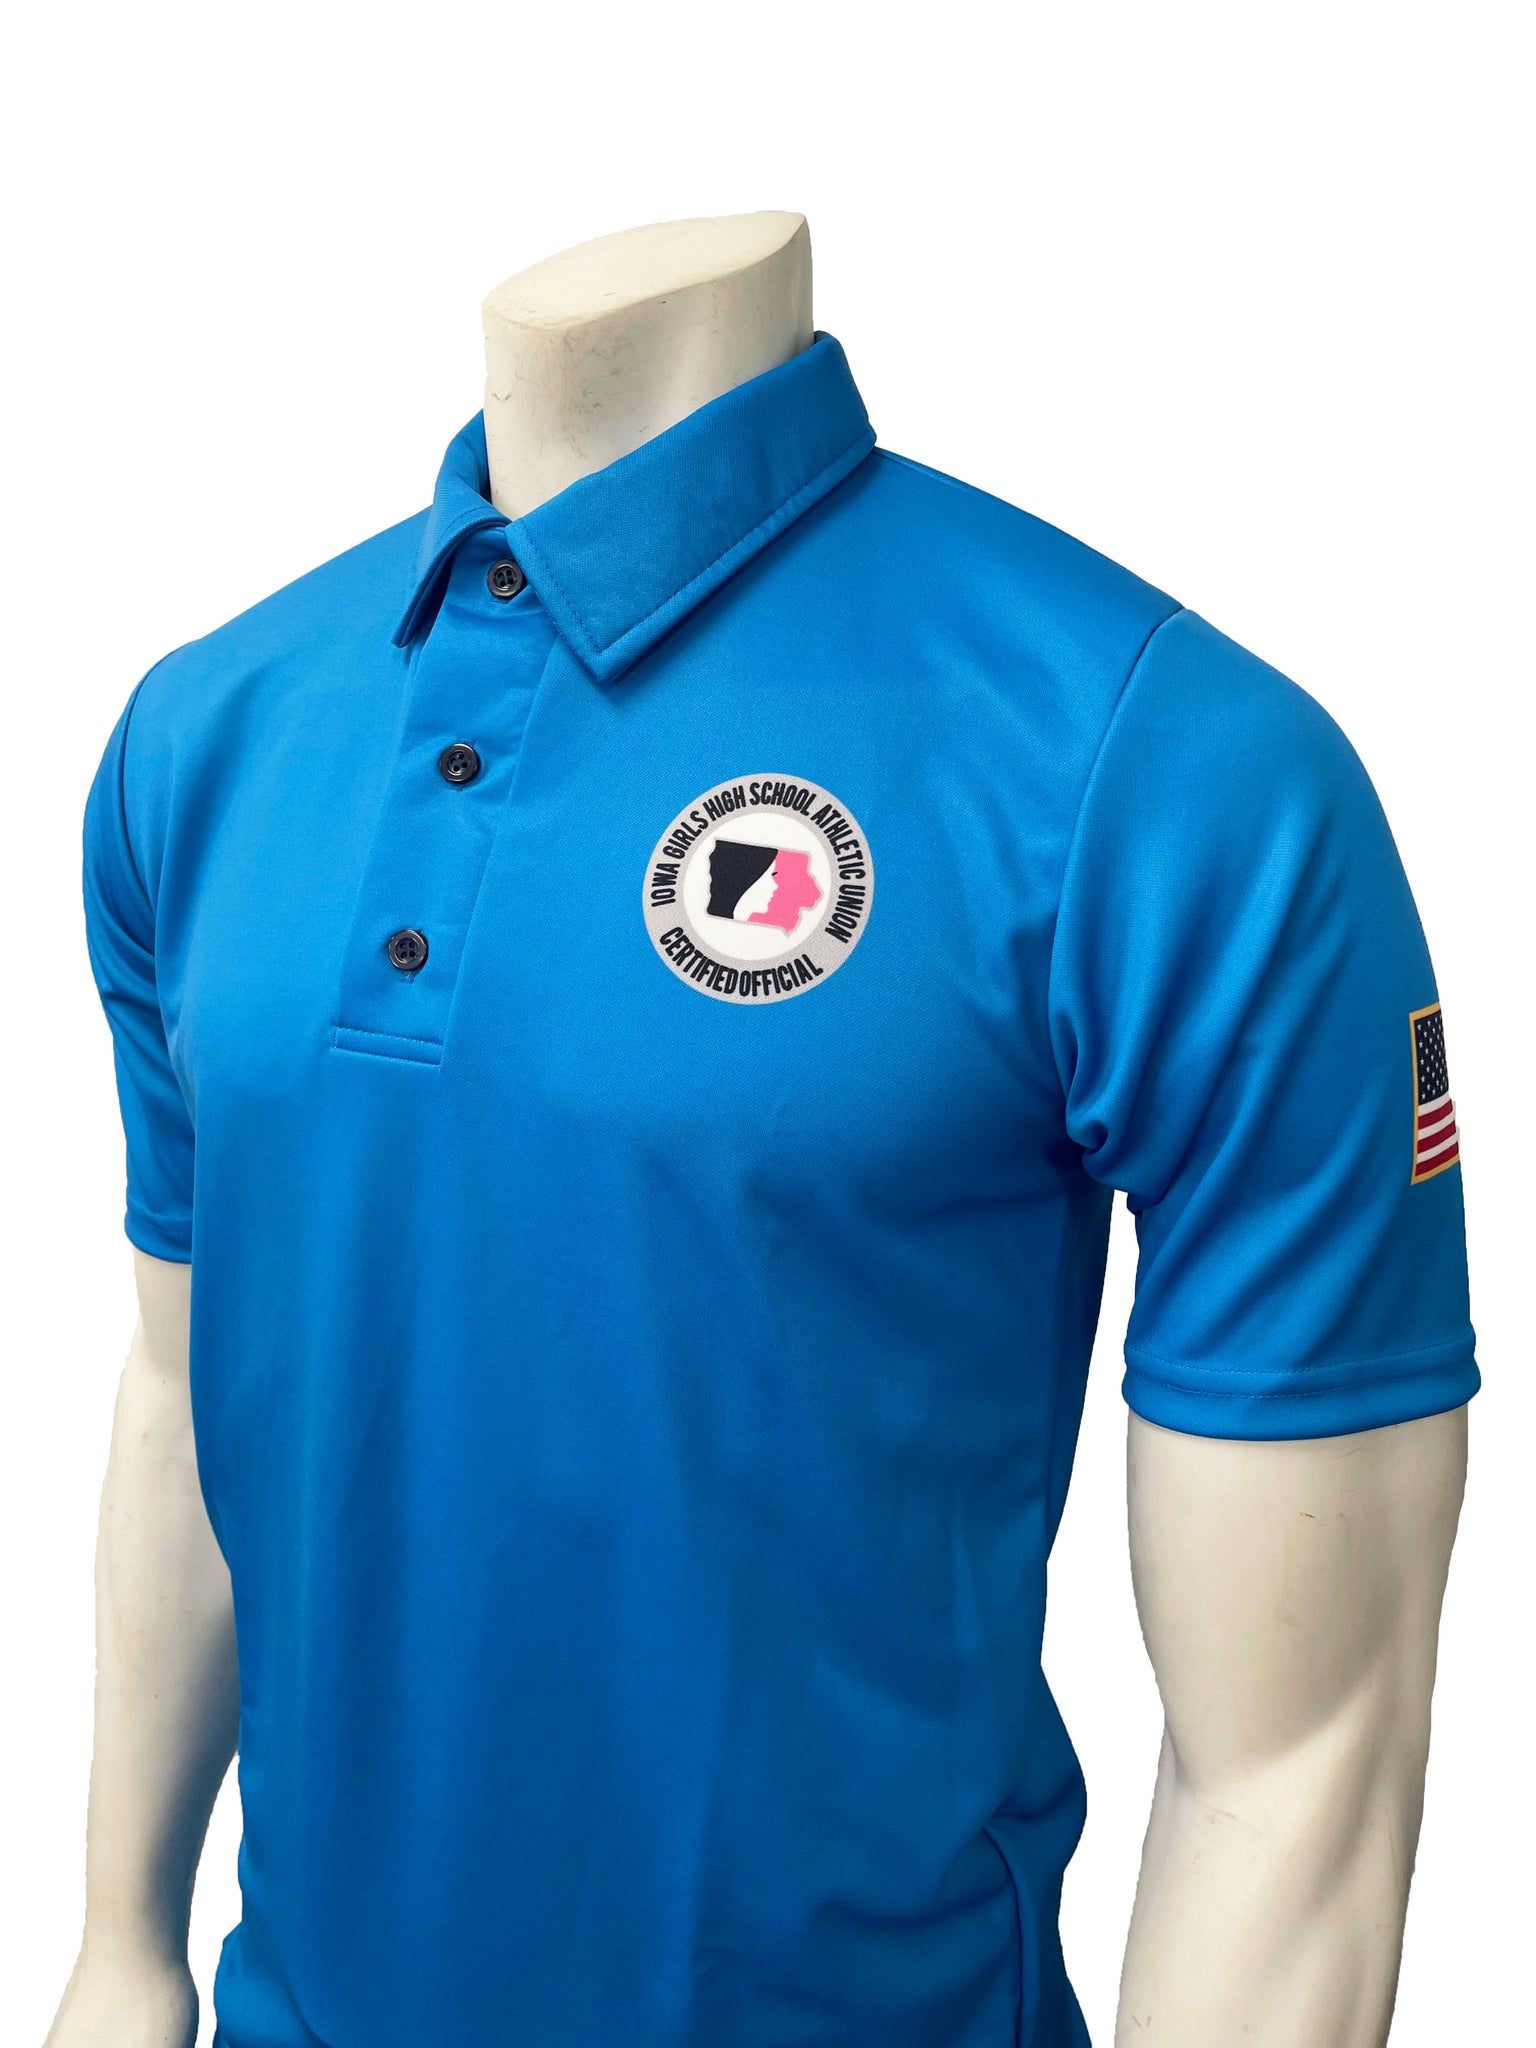 USA400IGU-BB- Smitty "Made in USA" - IGHSAU Men's Short Sleeve "BRIGHT BLUE" Volleyball Shirt